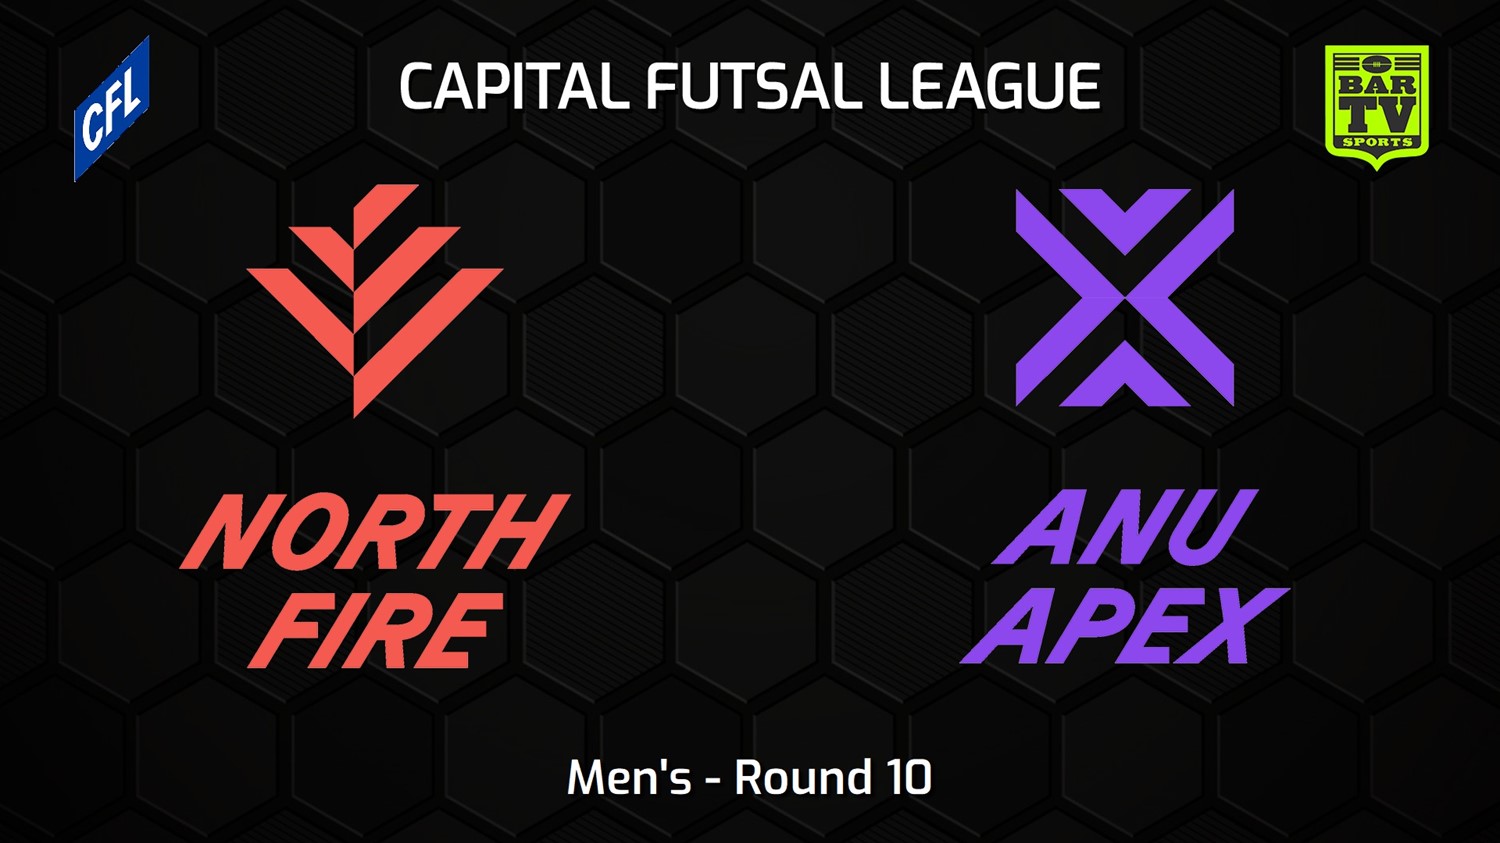 240128-Capital Football Futsal Round 10 - Men's - North Canberra Fire v ANU Apex Minigame Slate Image